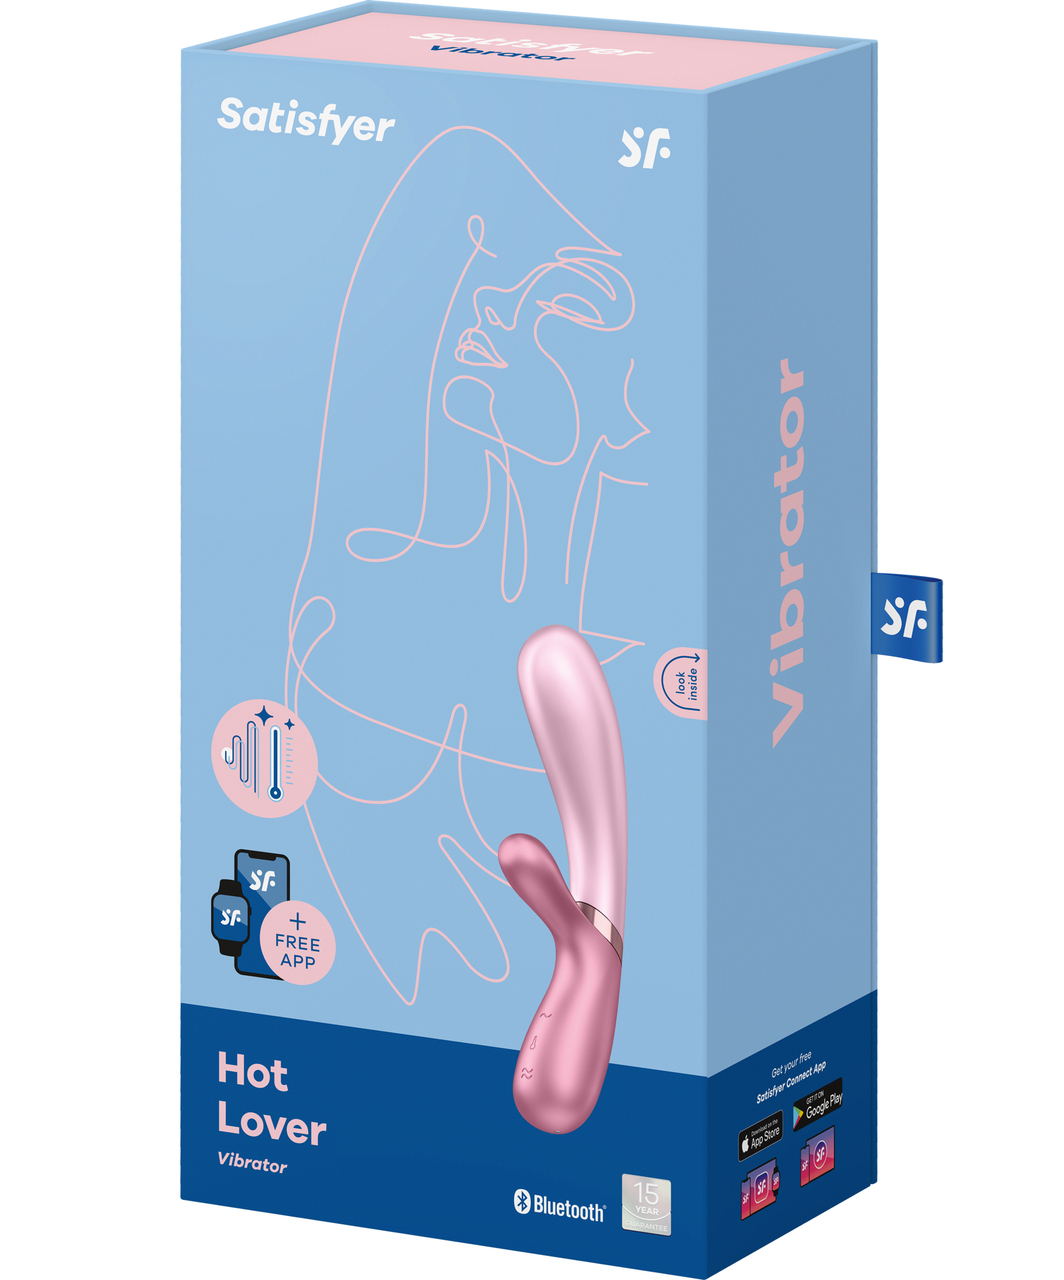 Satisfyer Hot Lover vibrator